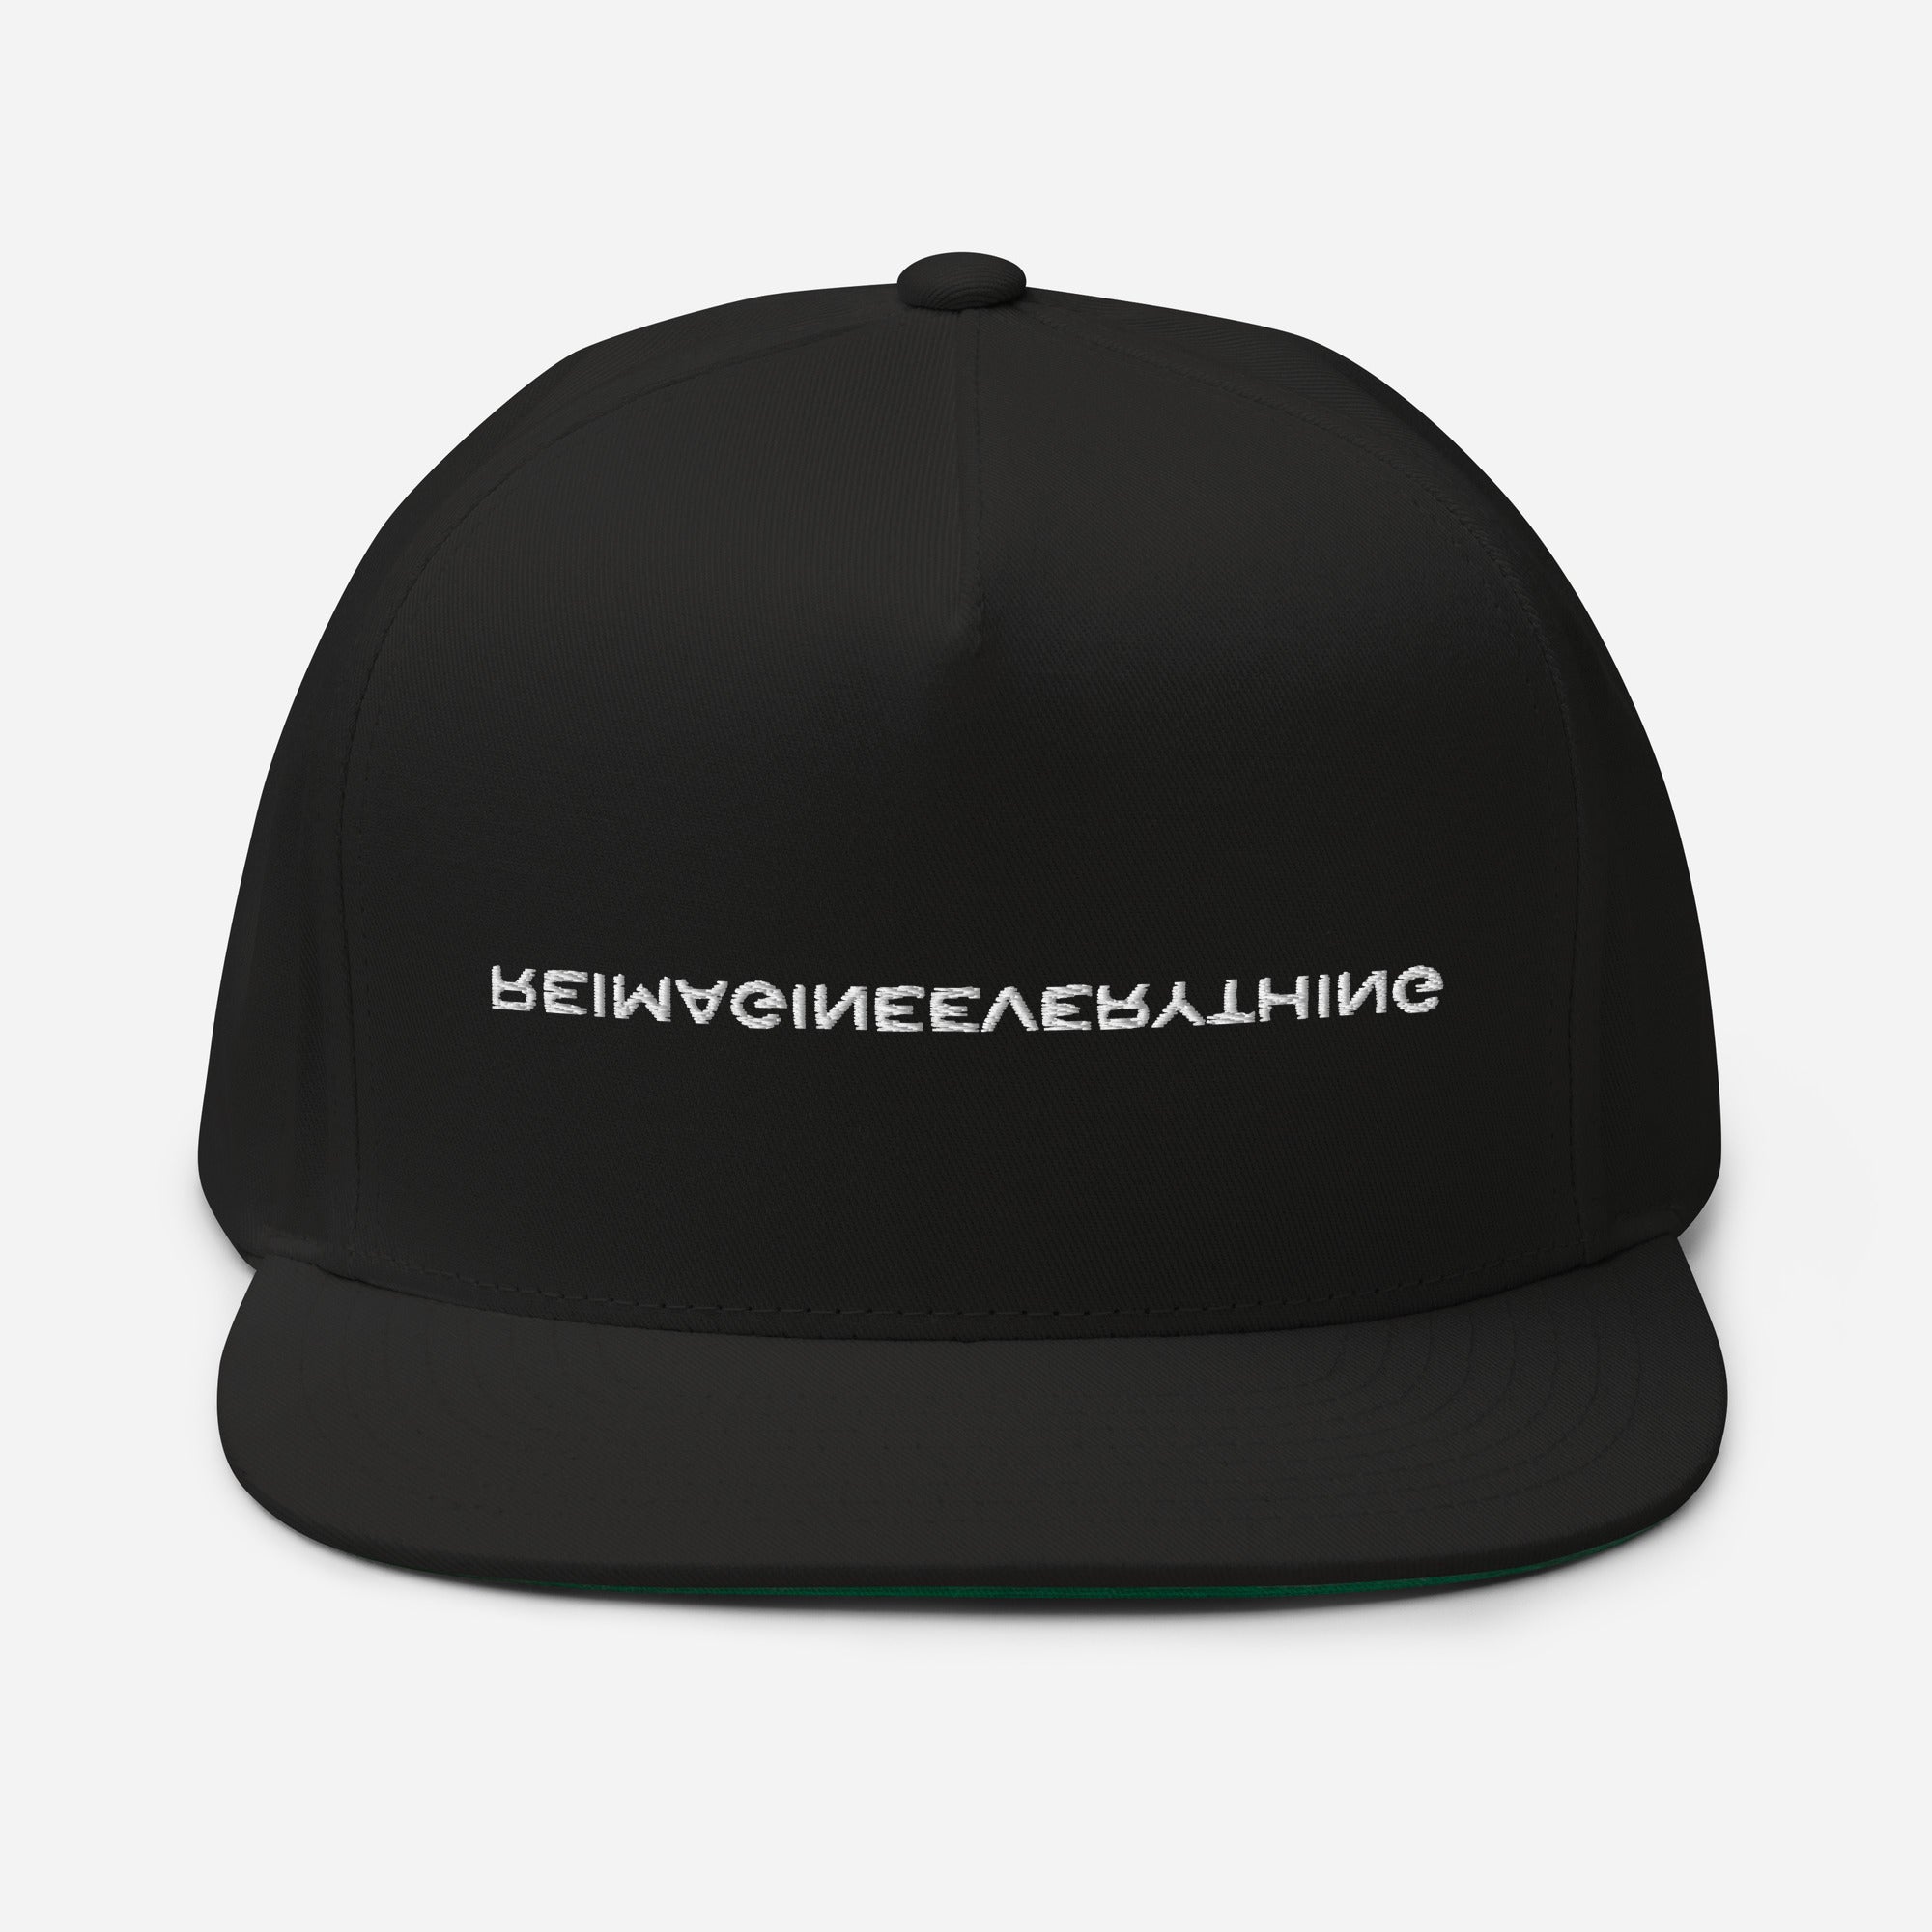 Jivomir Domoustchiev mercy reimagineeveryhting snap back hat cap lid